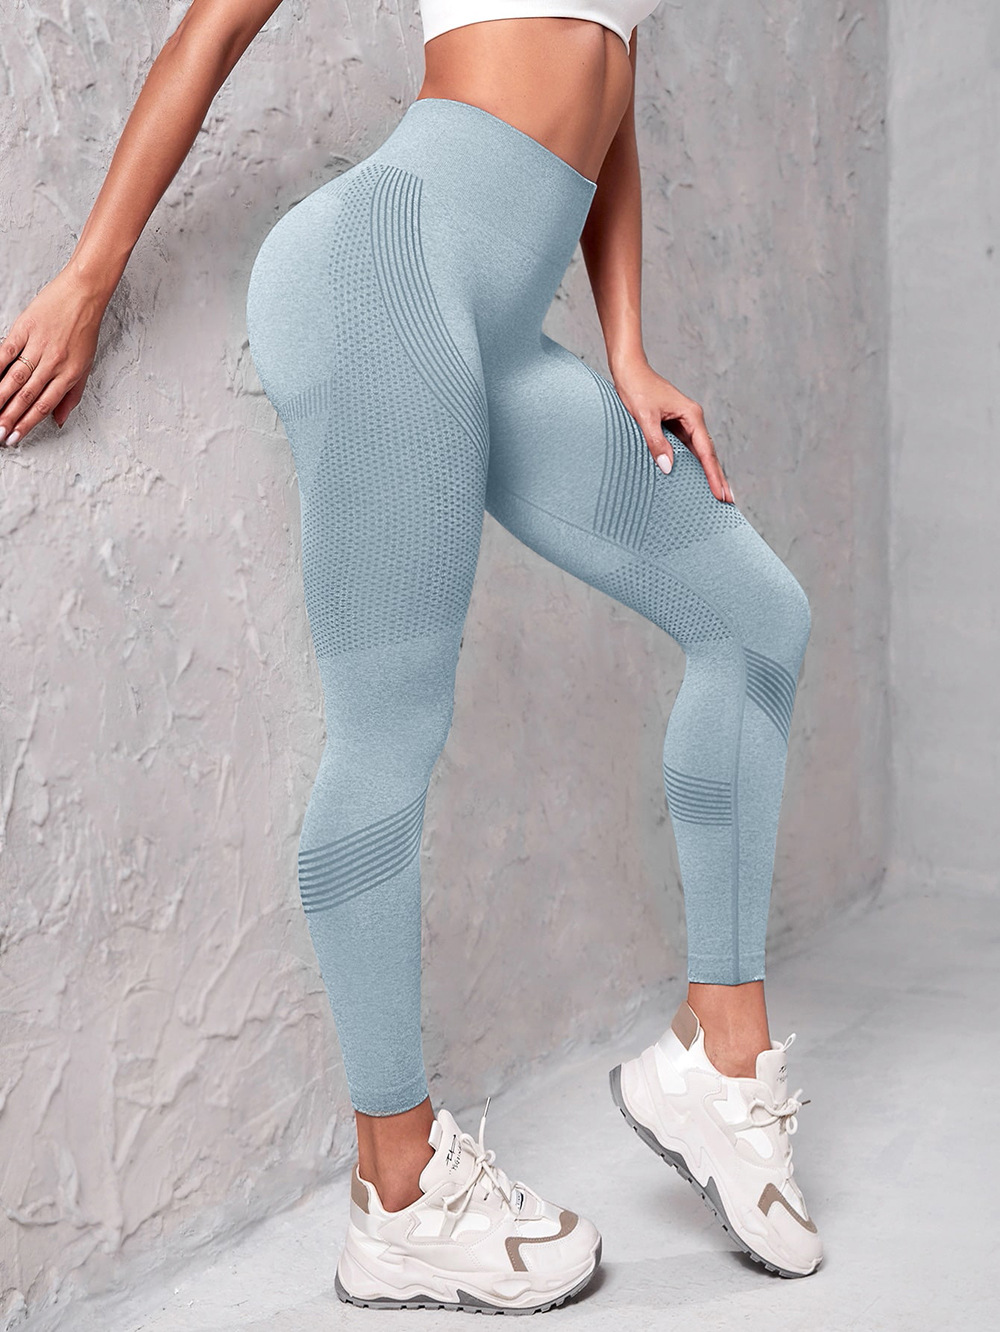 EHQJNJ Petite Yoga Pants Seamless Solid Color Skinny High Waist Workout  Leggings Trainning Sports Lifting Pants 